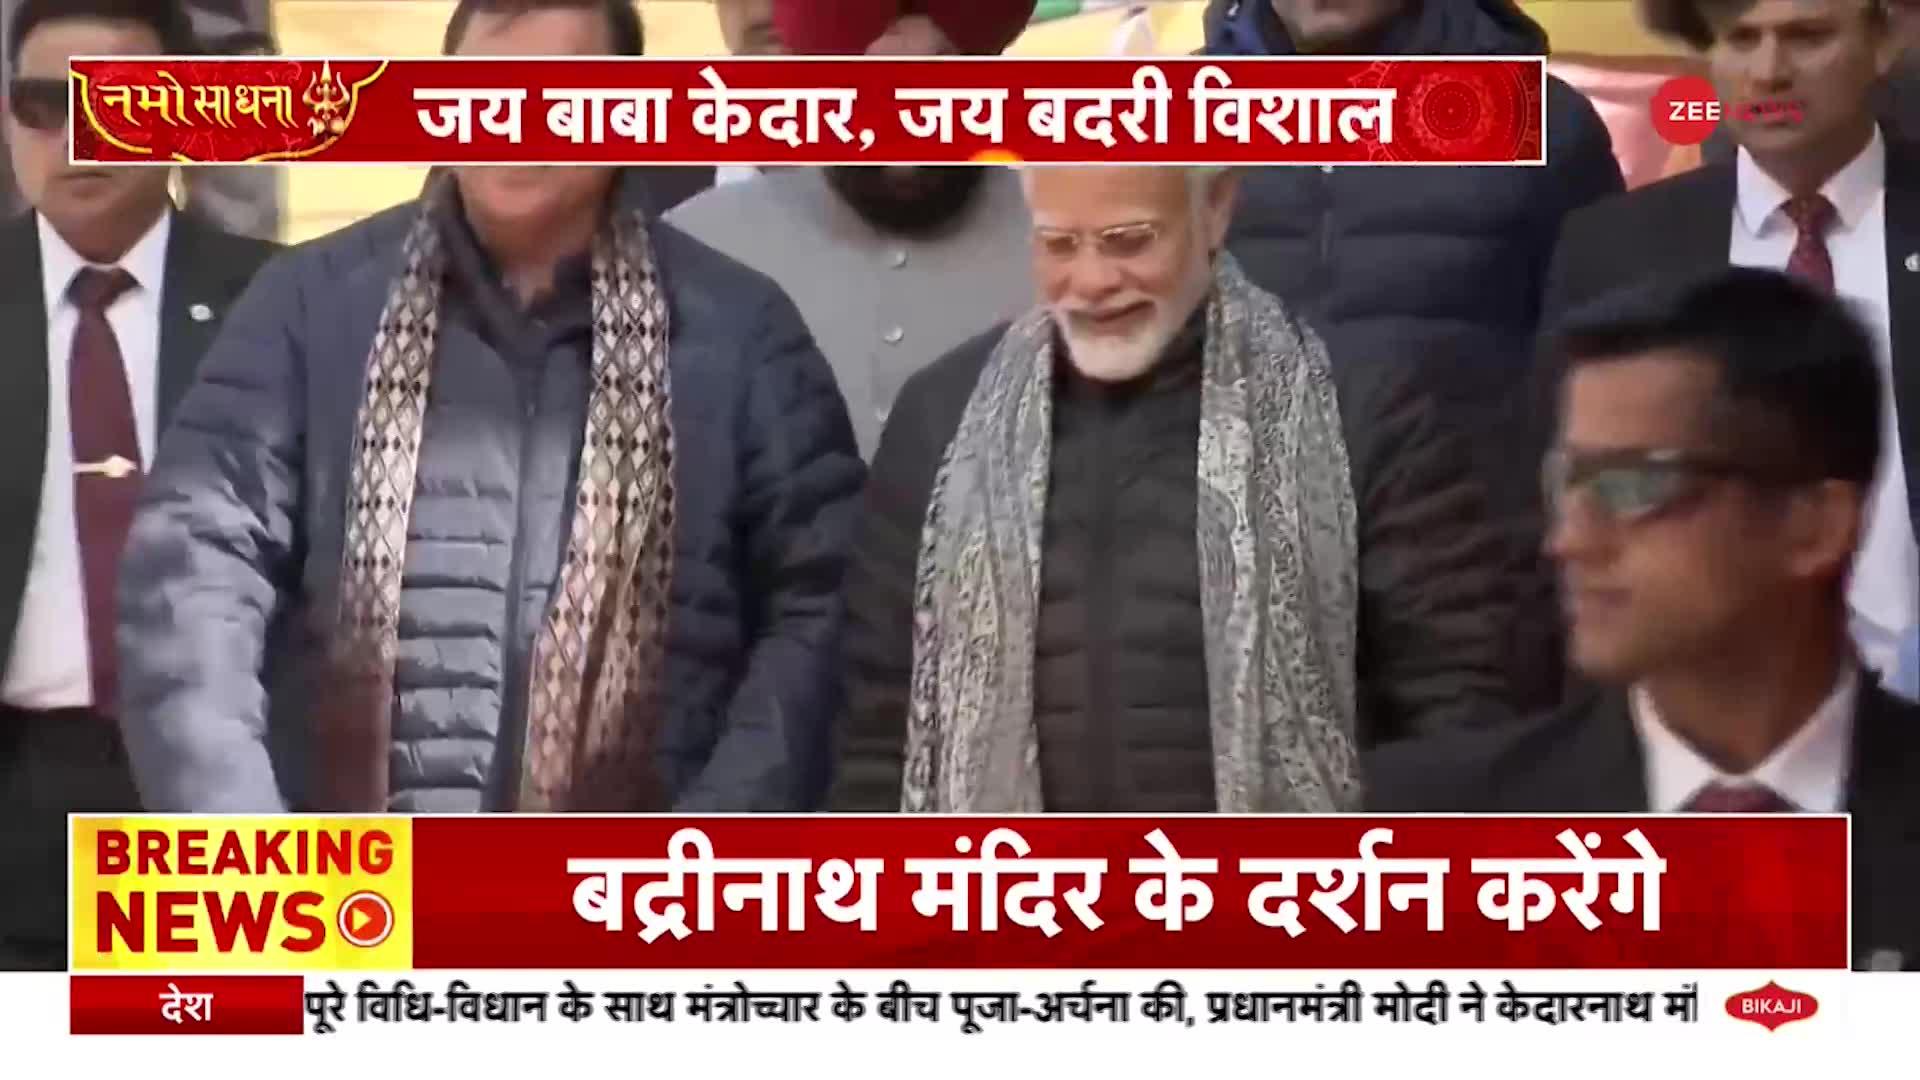 PM Modi Uttarakhand Visit: जय बाबा केदार, जय बदरी विशाल